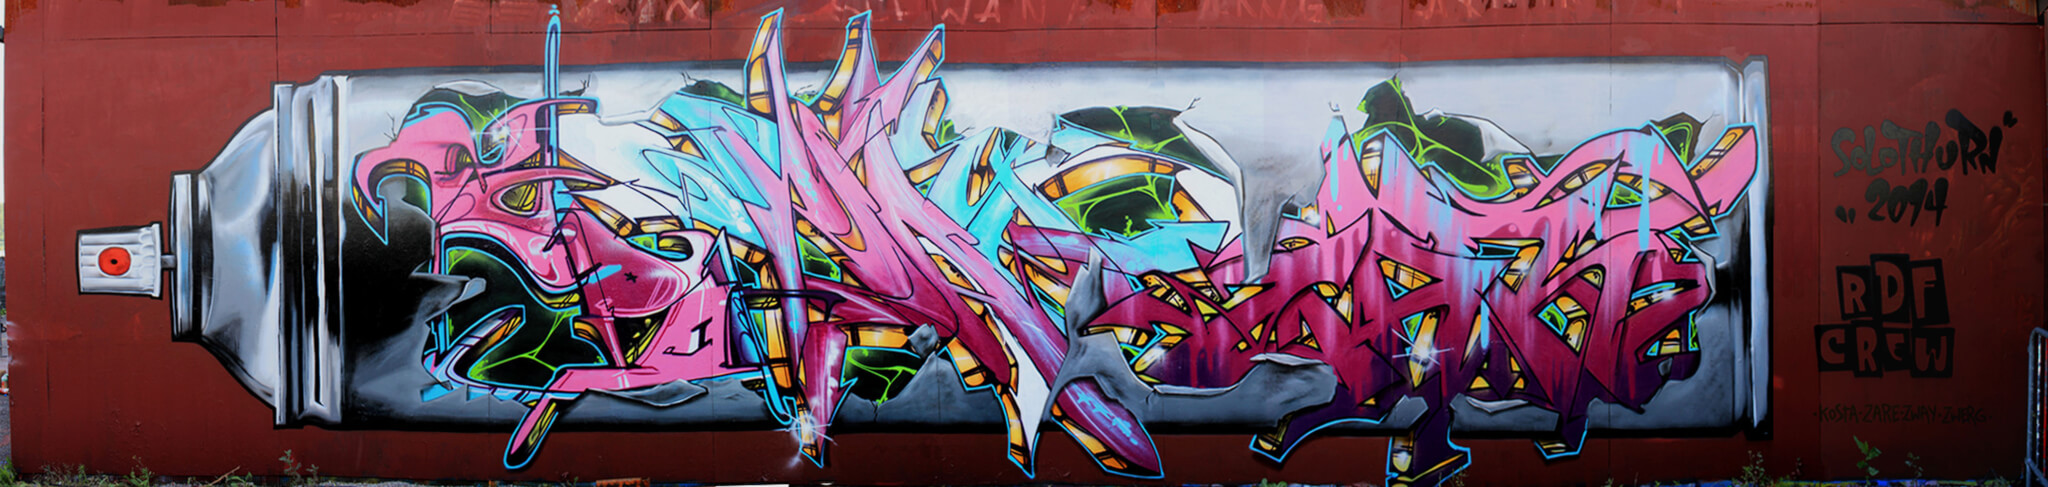 Graffiti Jam Solothurn - Spraycan by artist Max Kosta